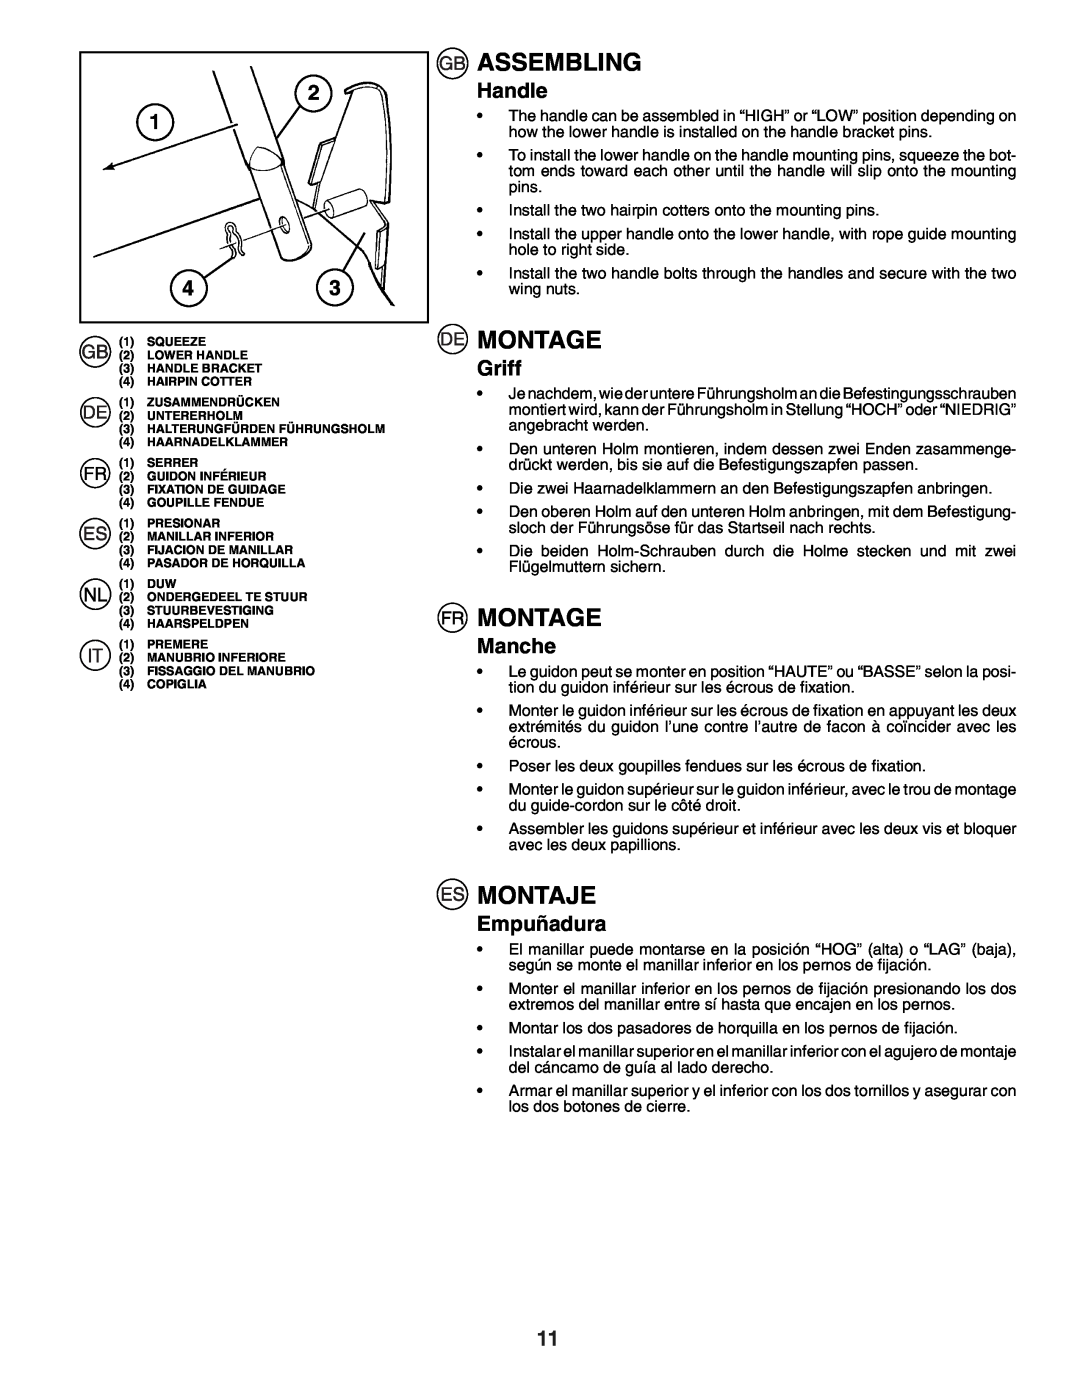 Husqvarna J50R instruction manual Assembling, Montage, Montaje, Handle, Griff, Manche, Empuñadura 